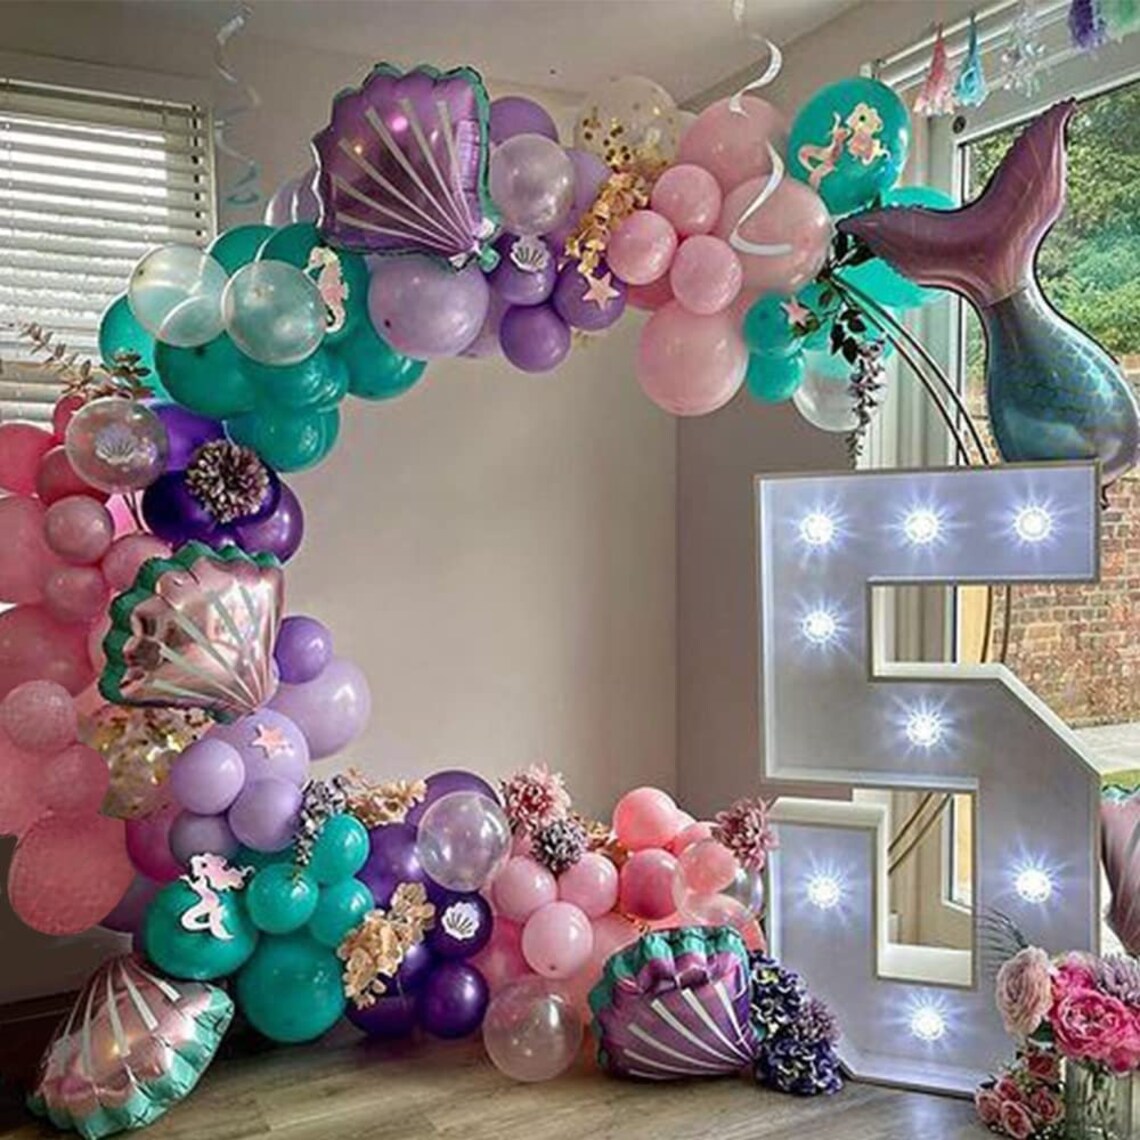 Mermaid Balloon Garland  Mermaid Tail Balloons Arch Kit